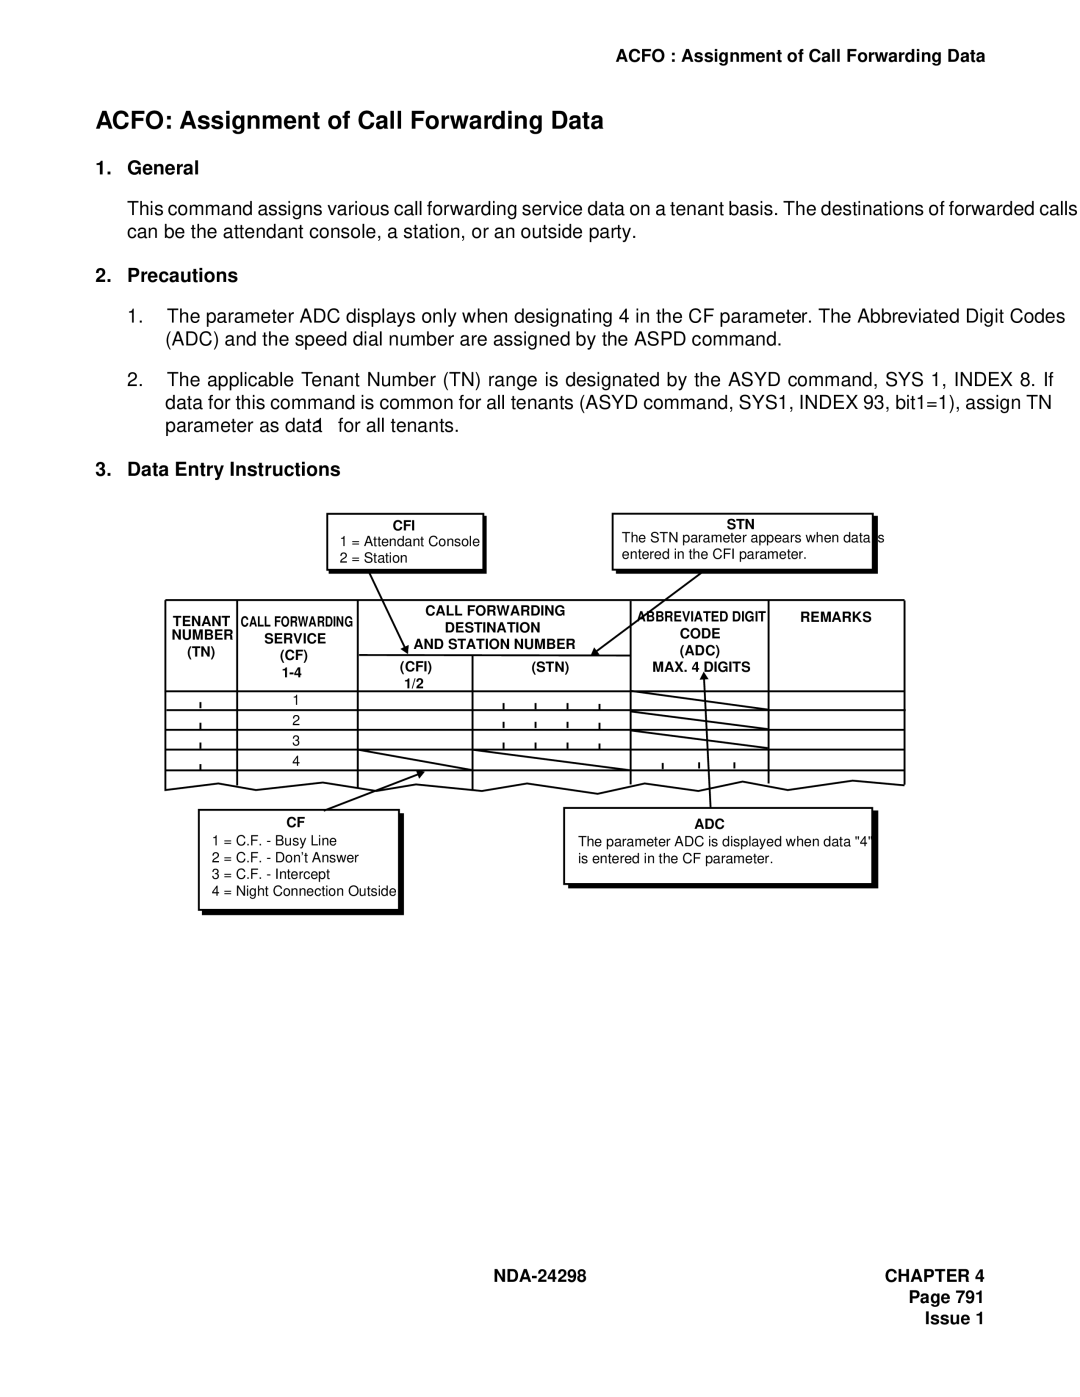 NEC NDA-24298 manual Acfo Assignment of Call Forwarding Data 